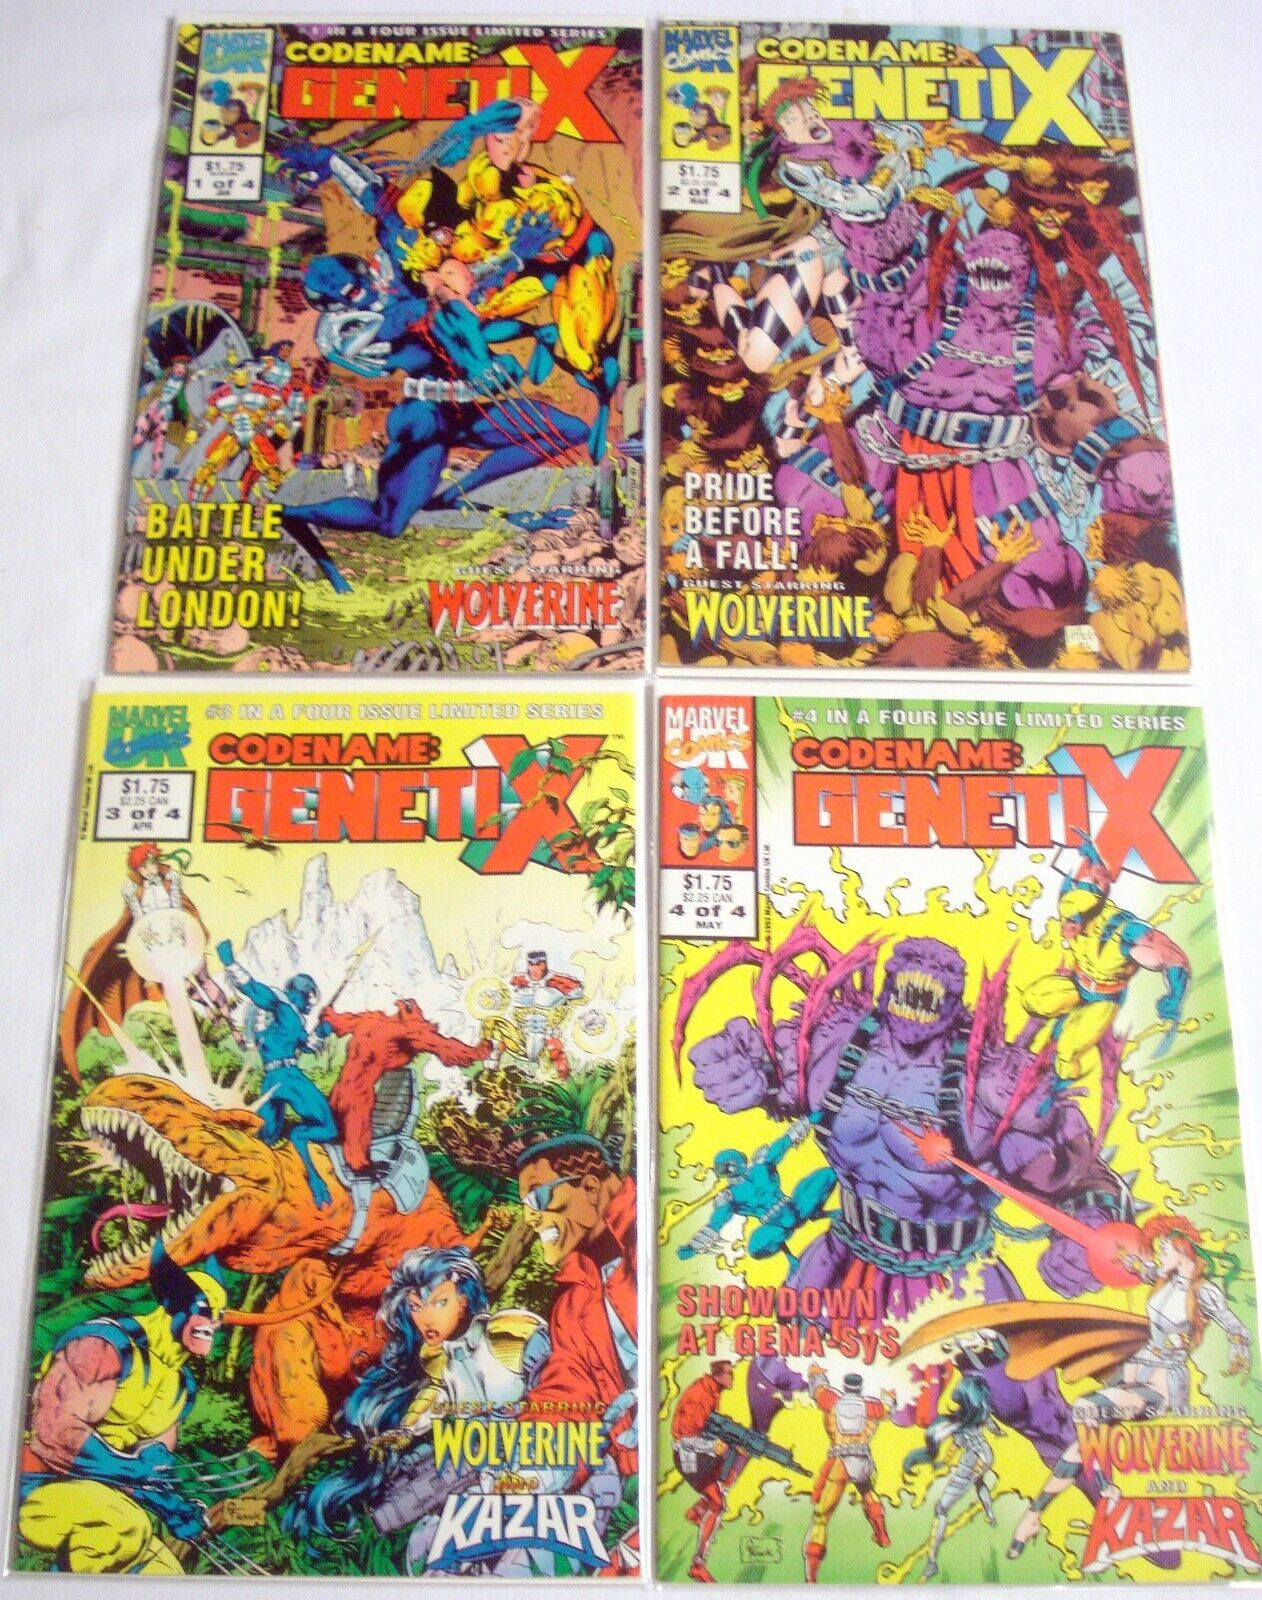 Codename: Genetix #1, #2, #3, #4 Complete Series Fine Marvel Comics 1993